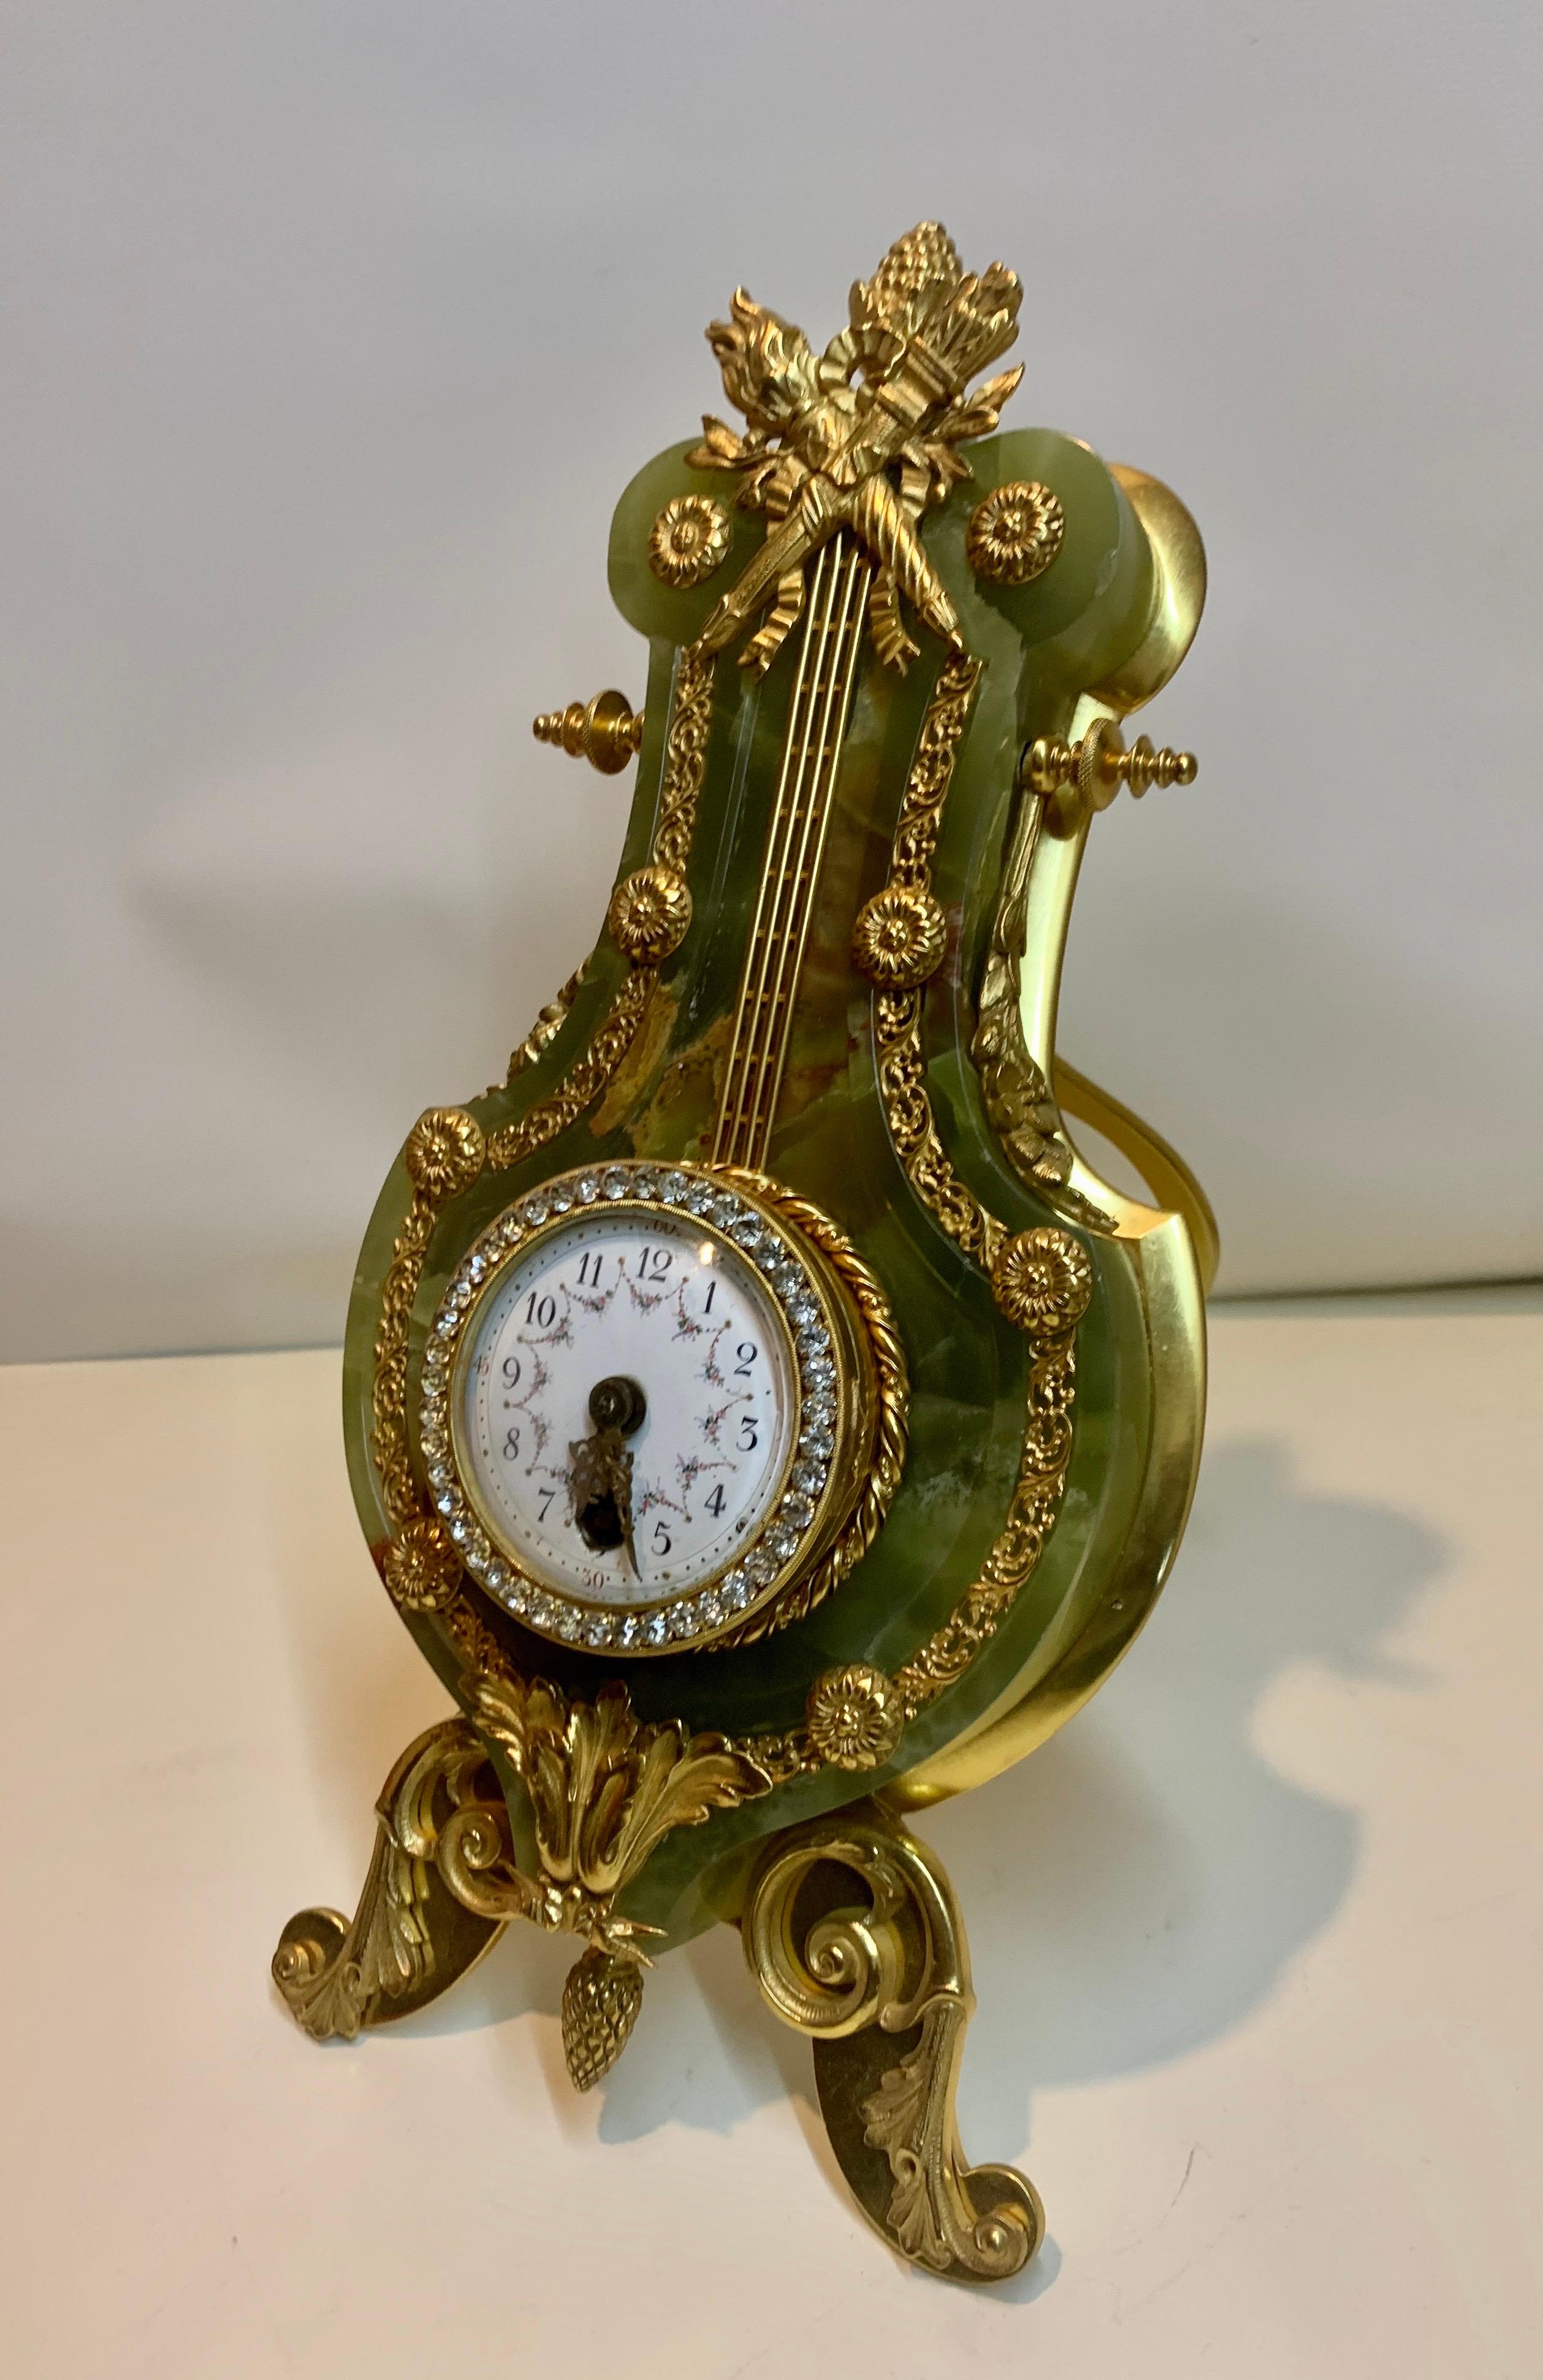 Grand Tour Superb Antique Onyx, Ormolu & Jewelled Strut Clock, French 19th C